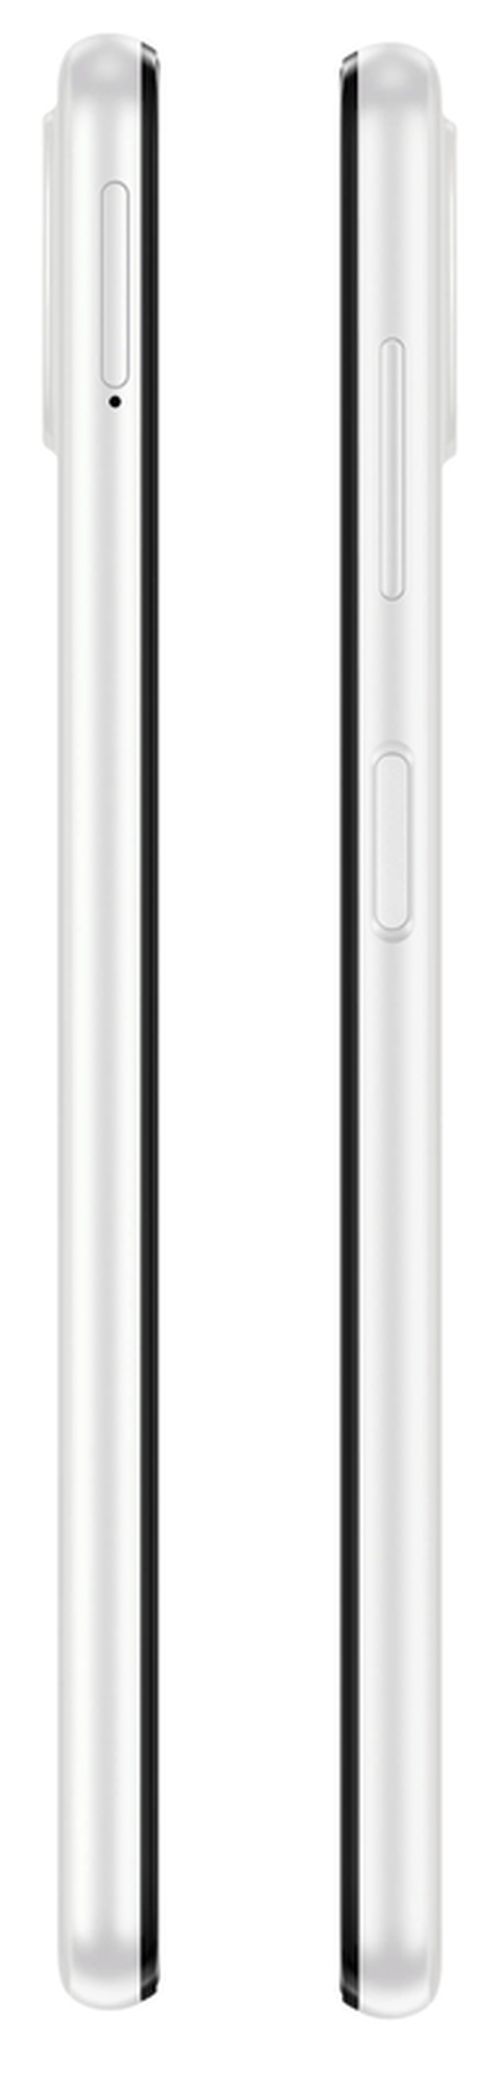 купить Смартфон Samsung A225/64 Galaxy A22 LTE White в Кишинёве 